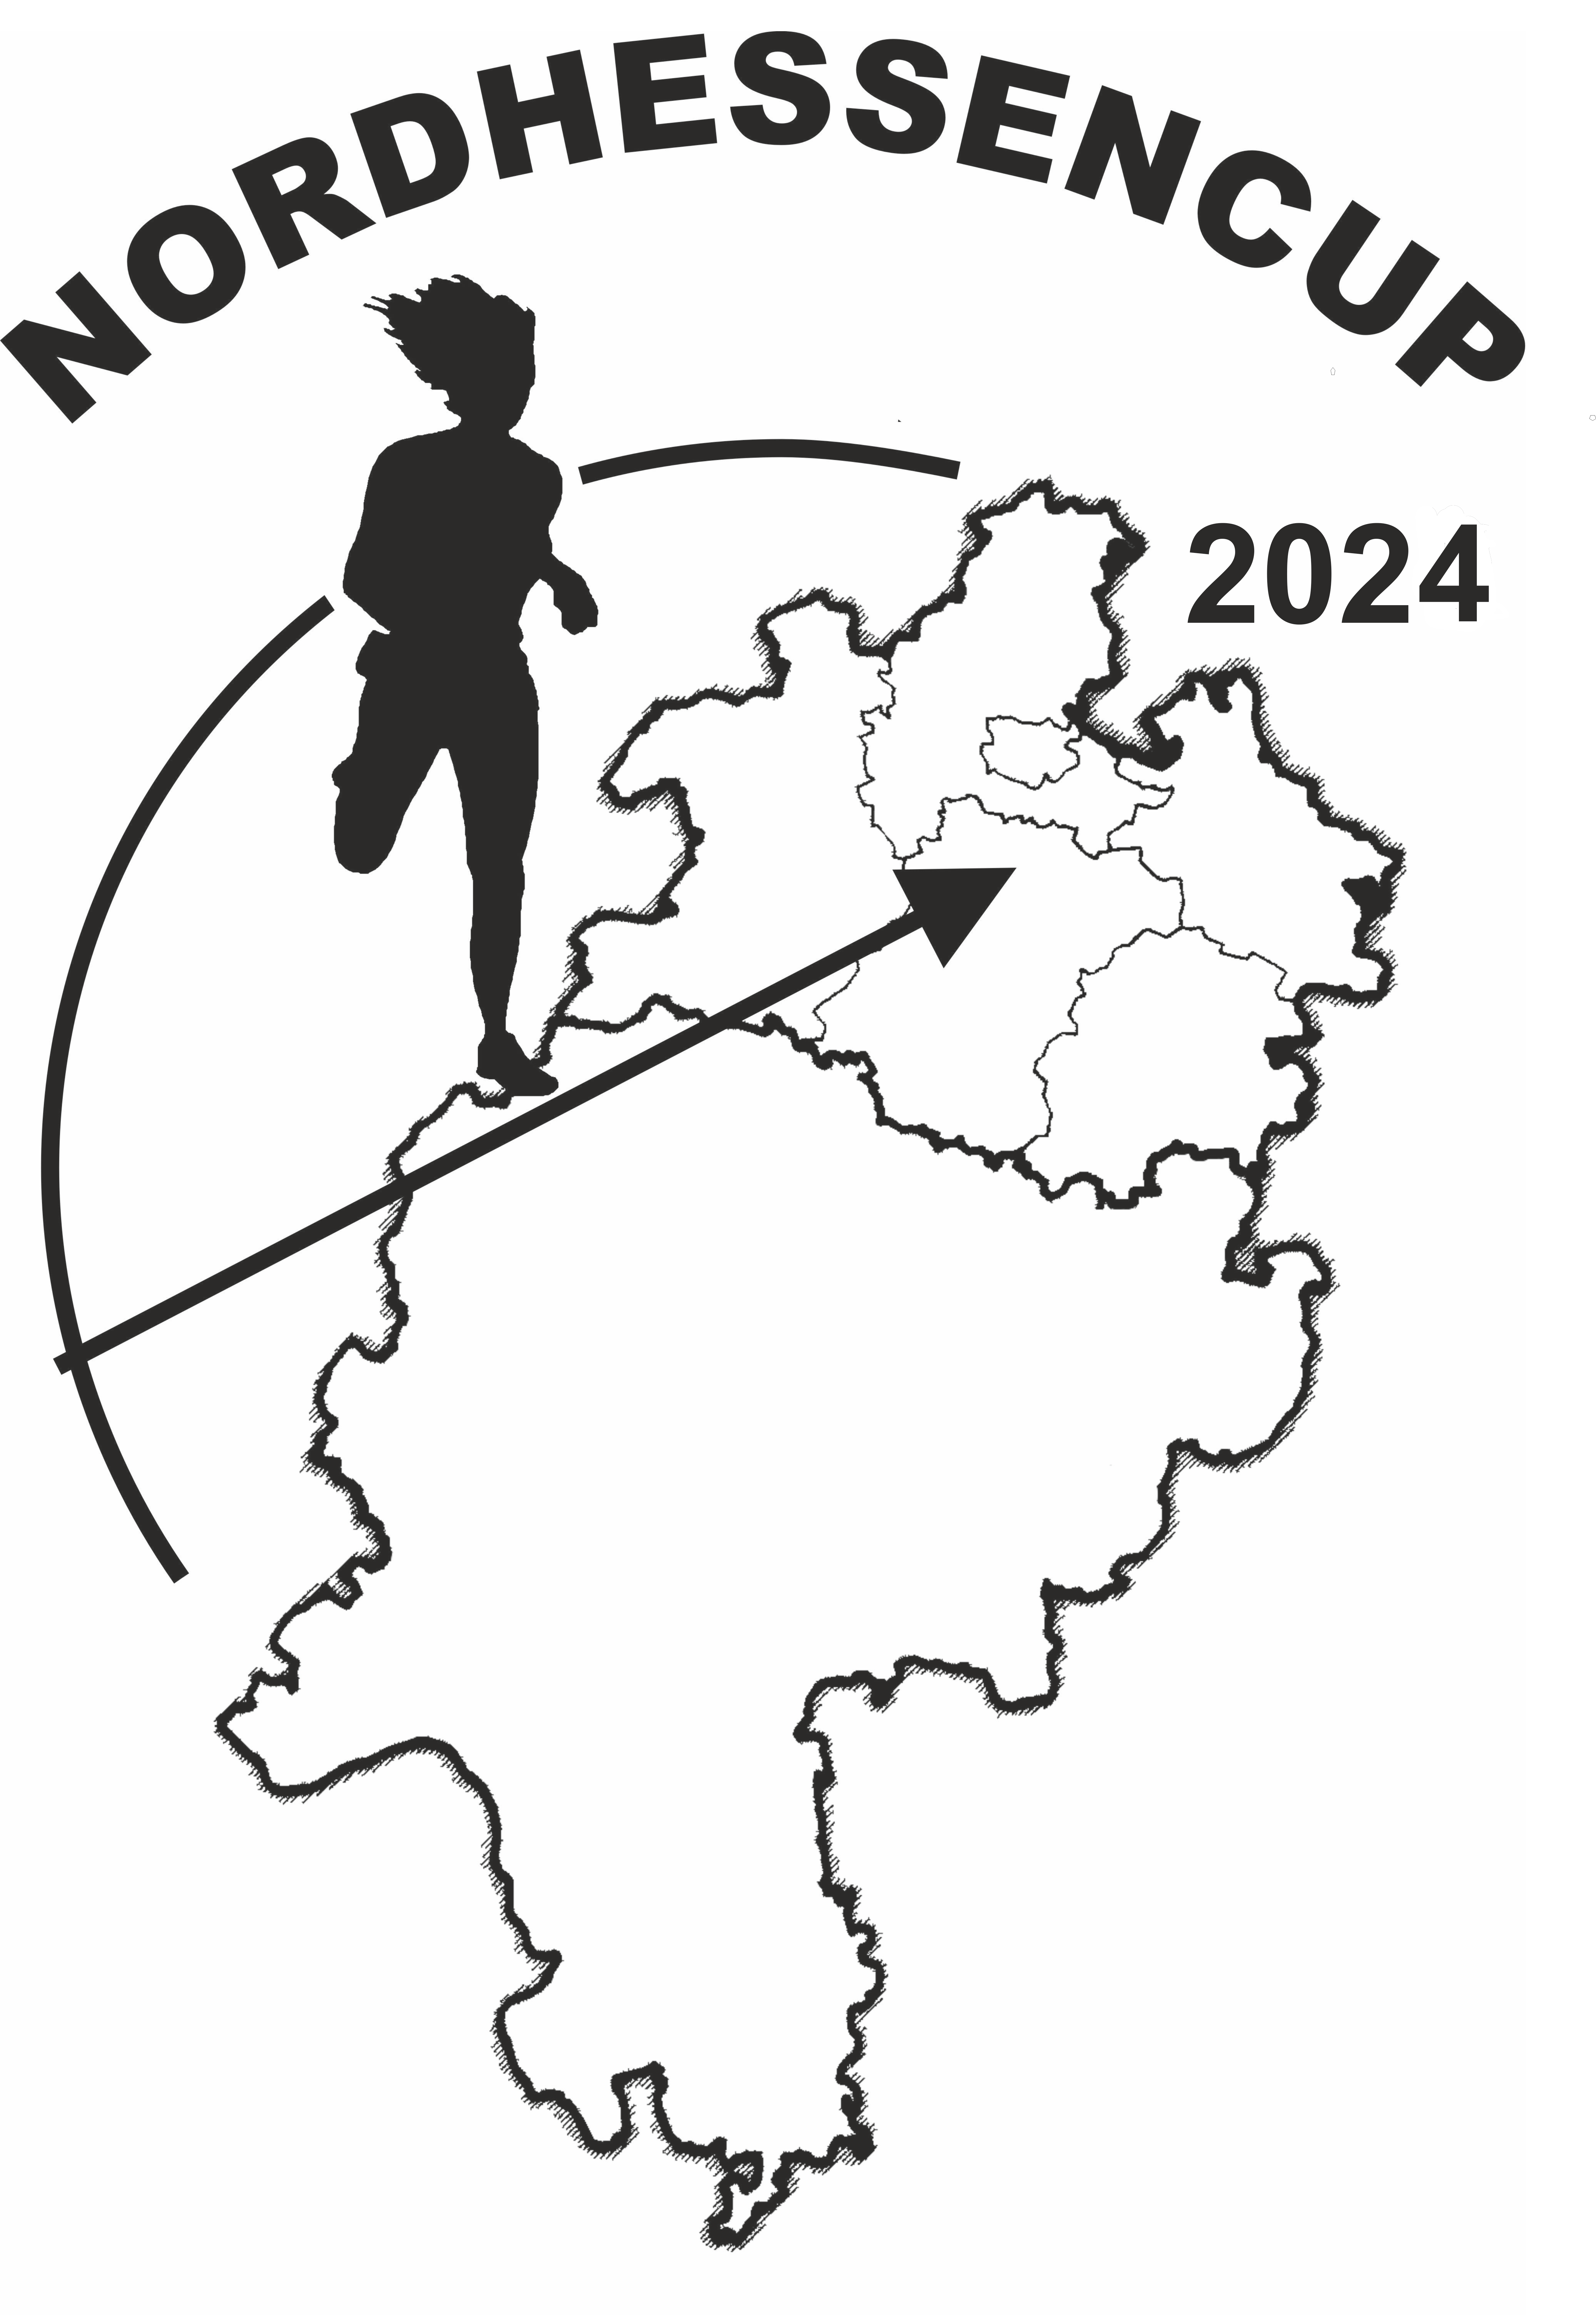 Nordhessencip Logo 2024